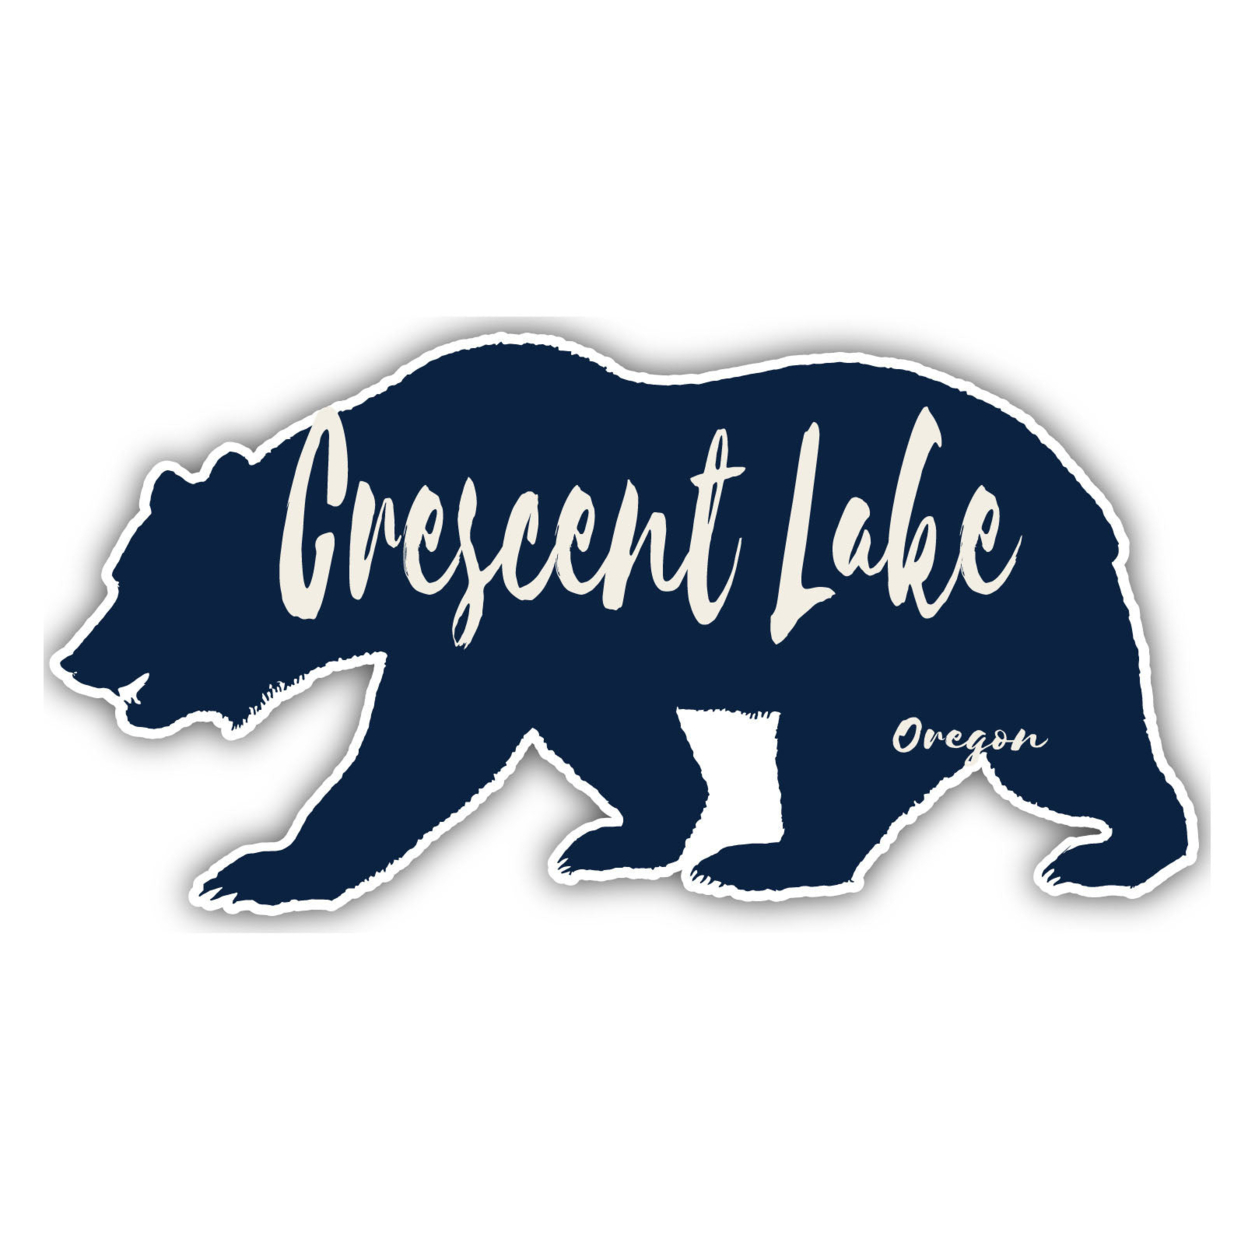 Crescent Lake Oregon Souvenir Decorative Stickers (Choose Theme And Size) - Single Unit, 6-Inch, Bear